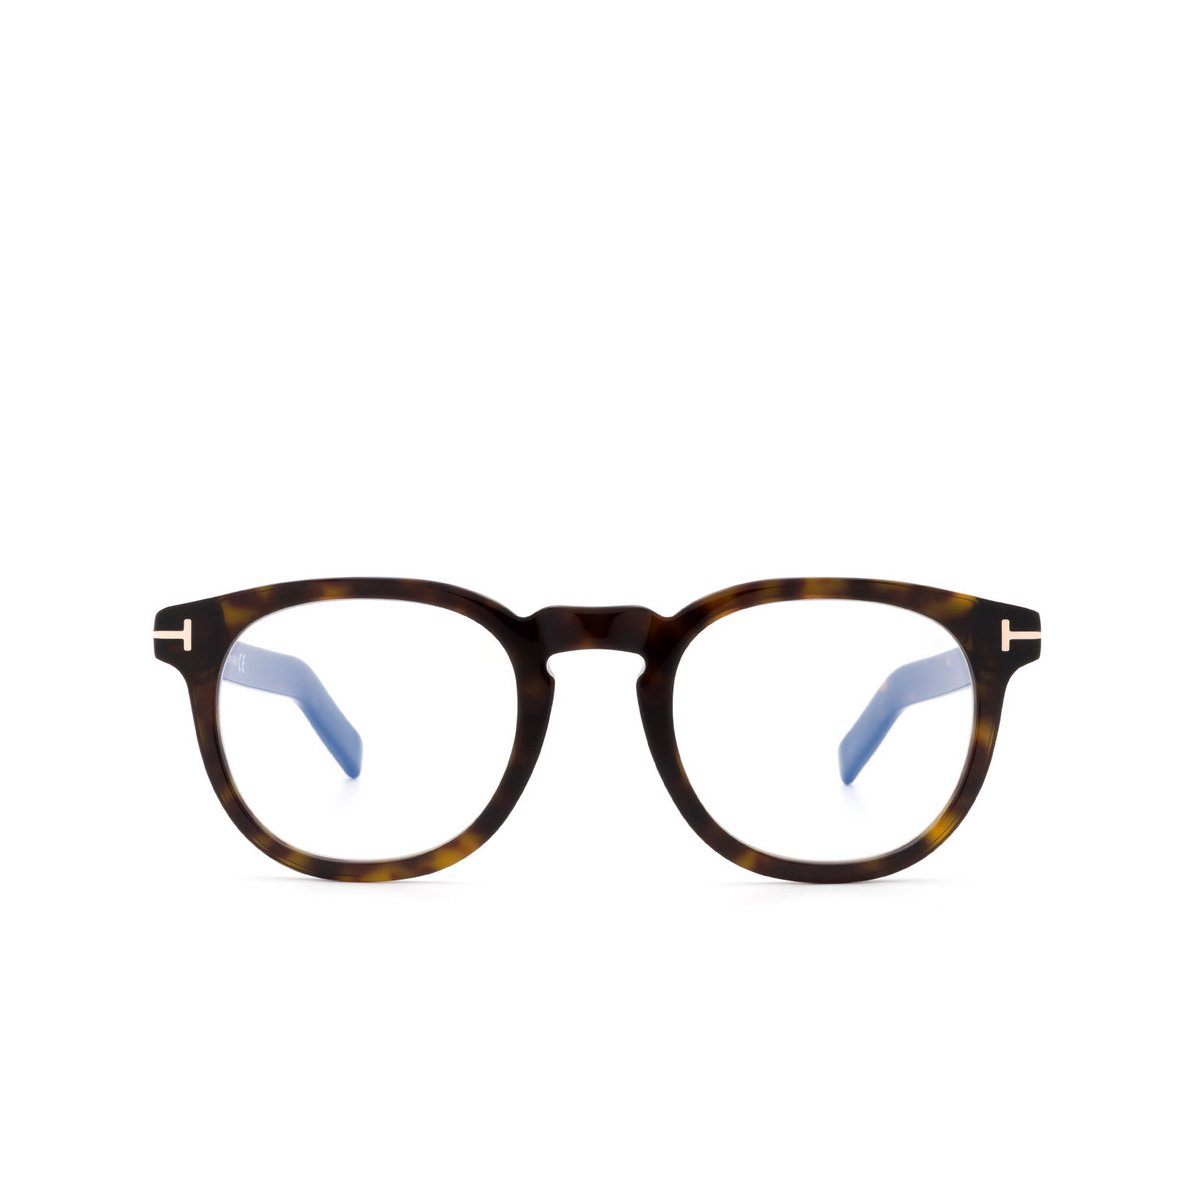 Tom Ford® Square Eyeglasses: FT5629-B color Dark Havana 052 - front view.